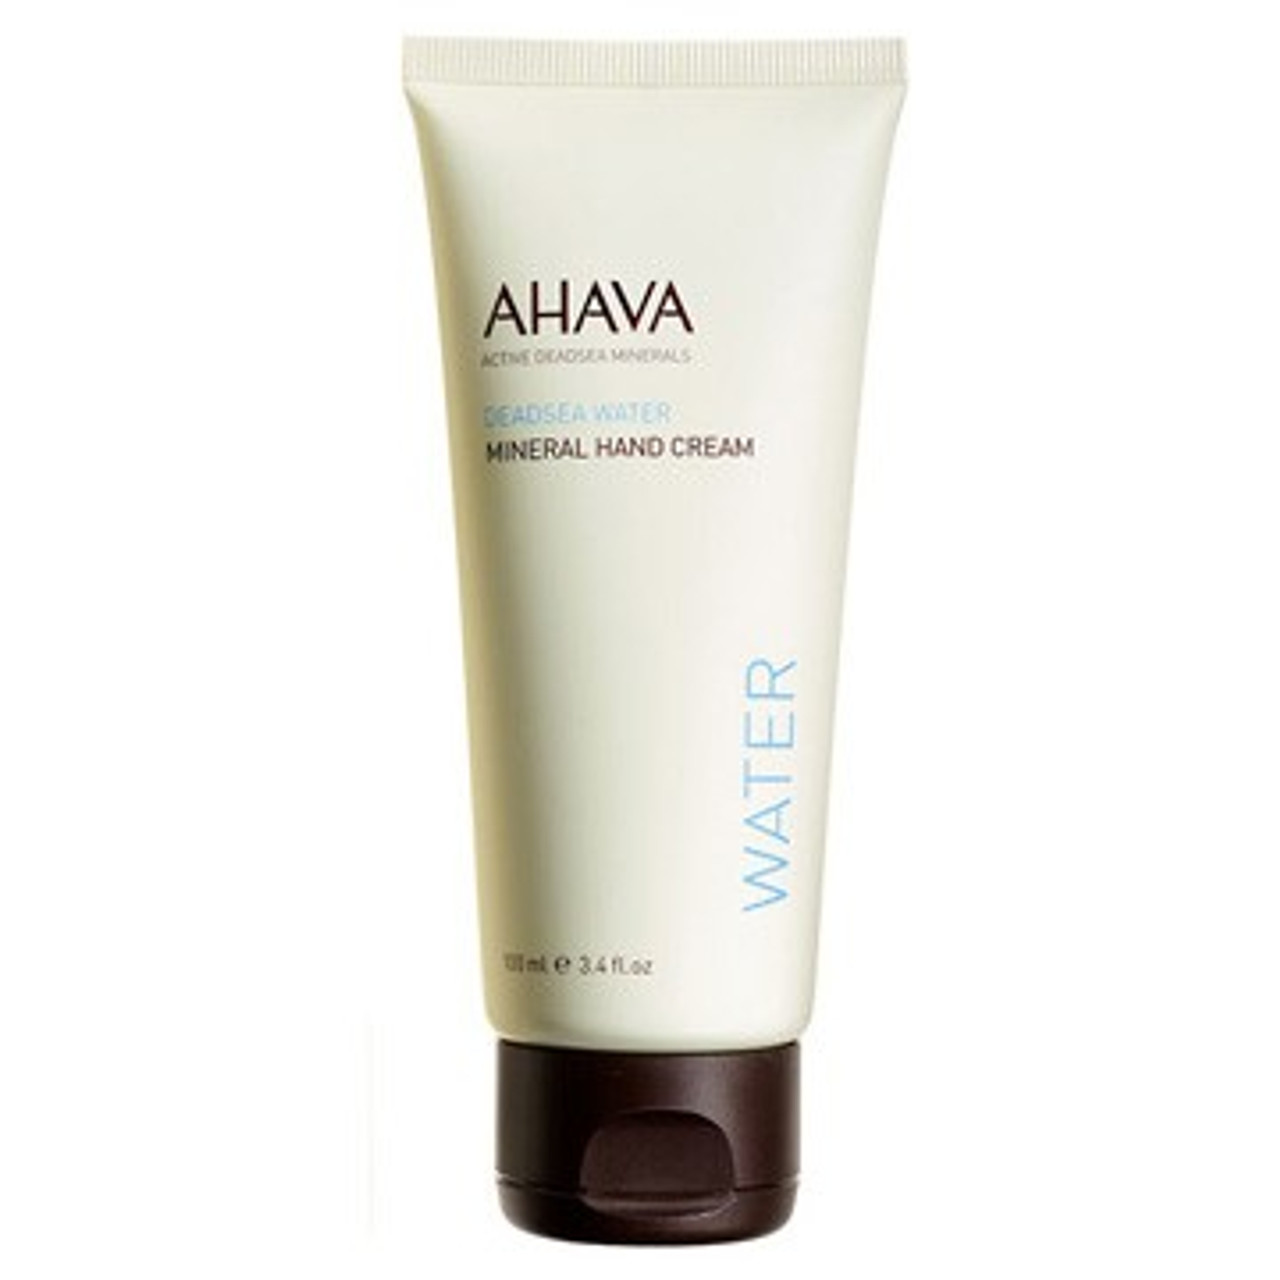 AHAVA DeadSea Water Mineral Hand Cream - 3.4 oz